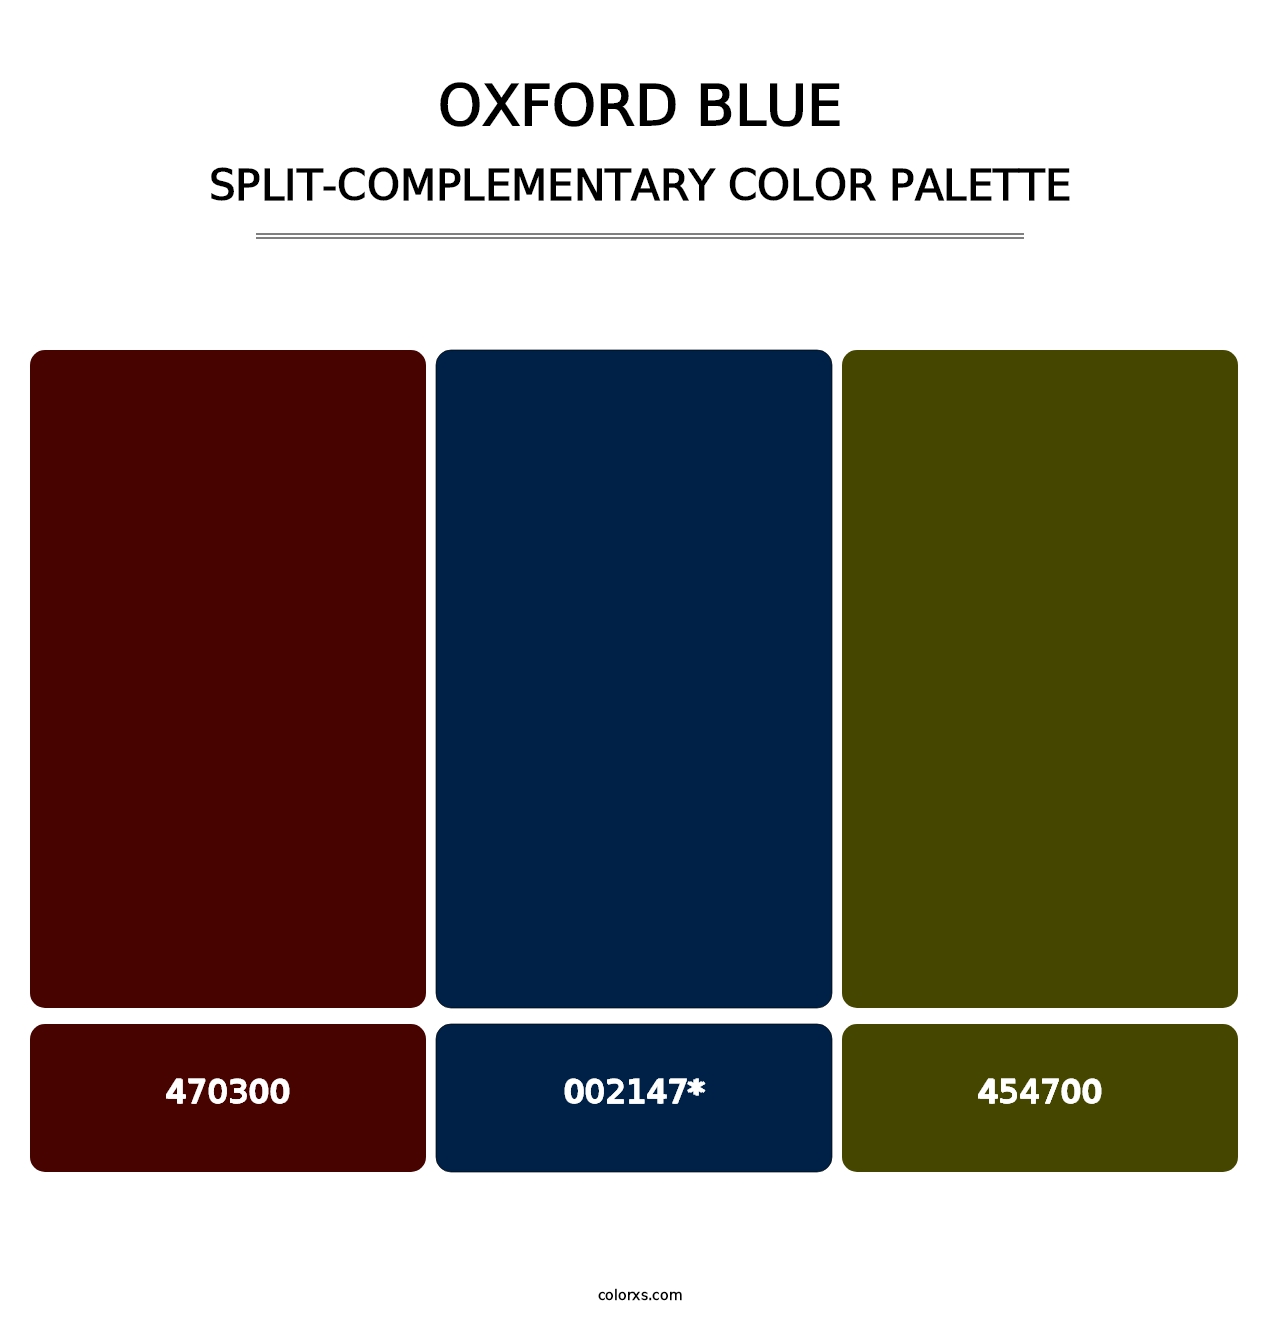 Oxford Blue - Split-Complementary Color Palette